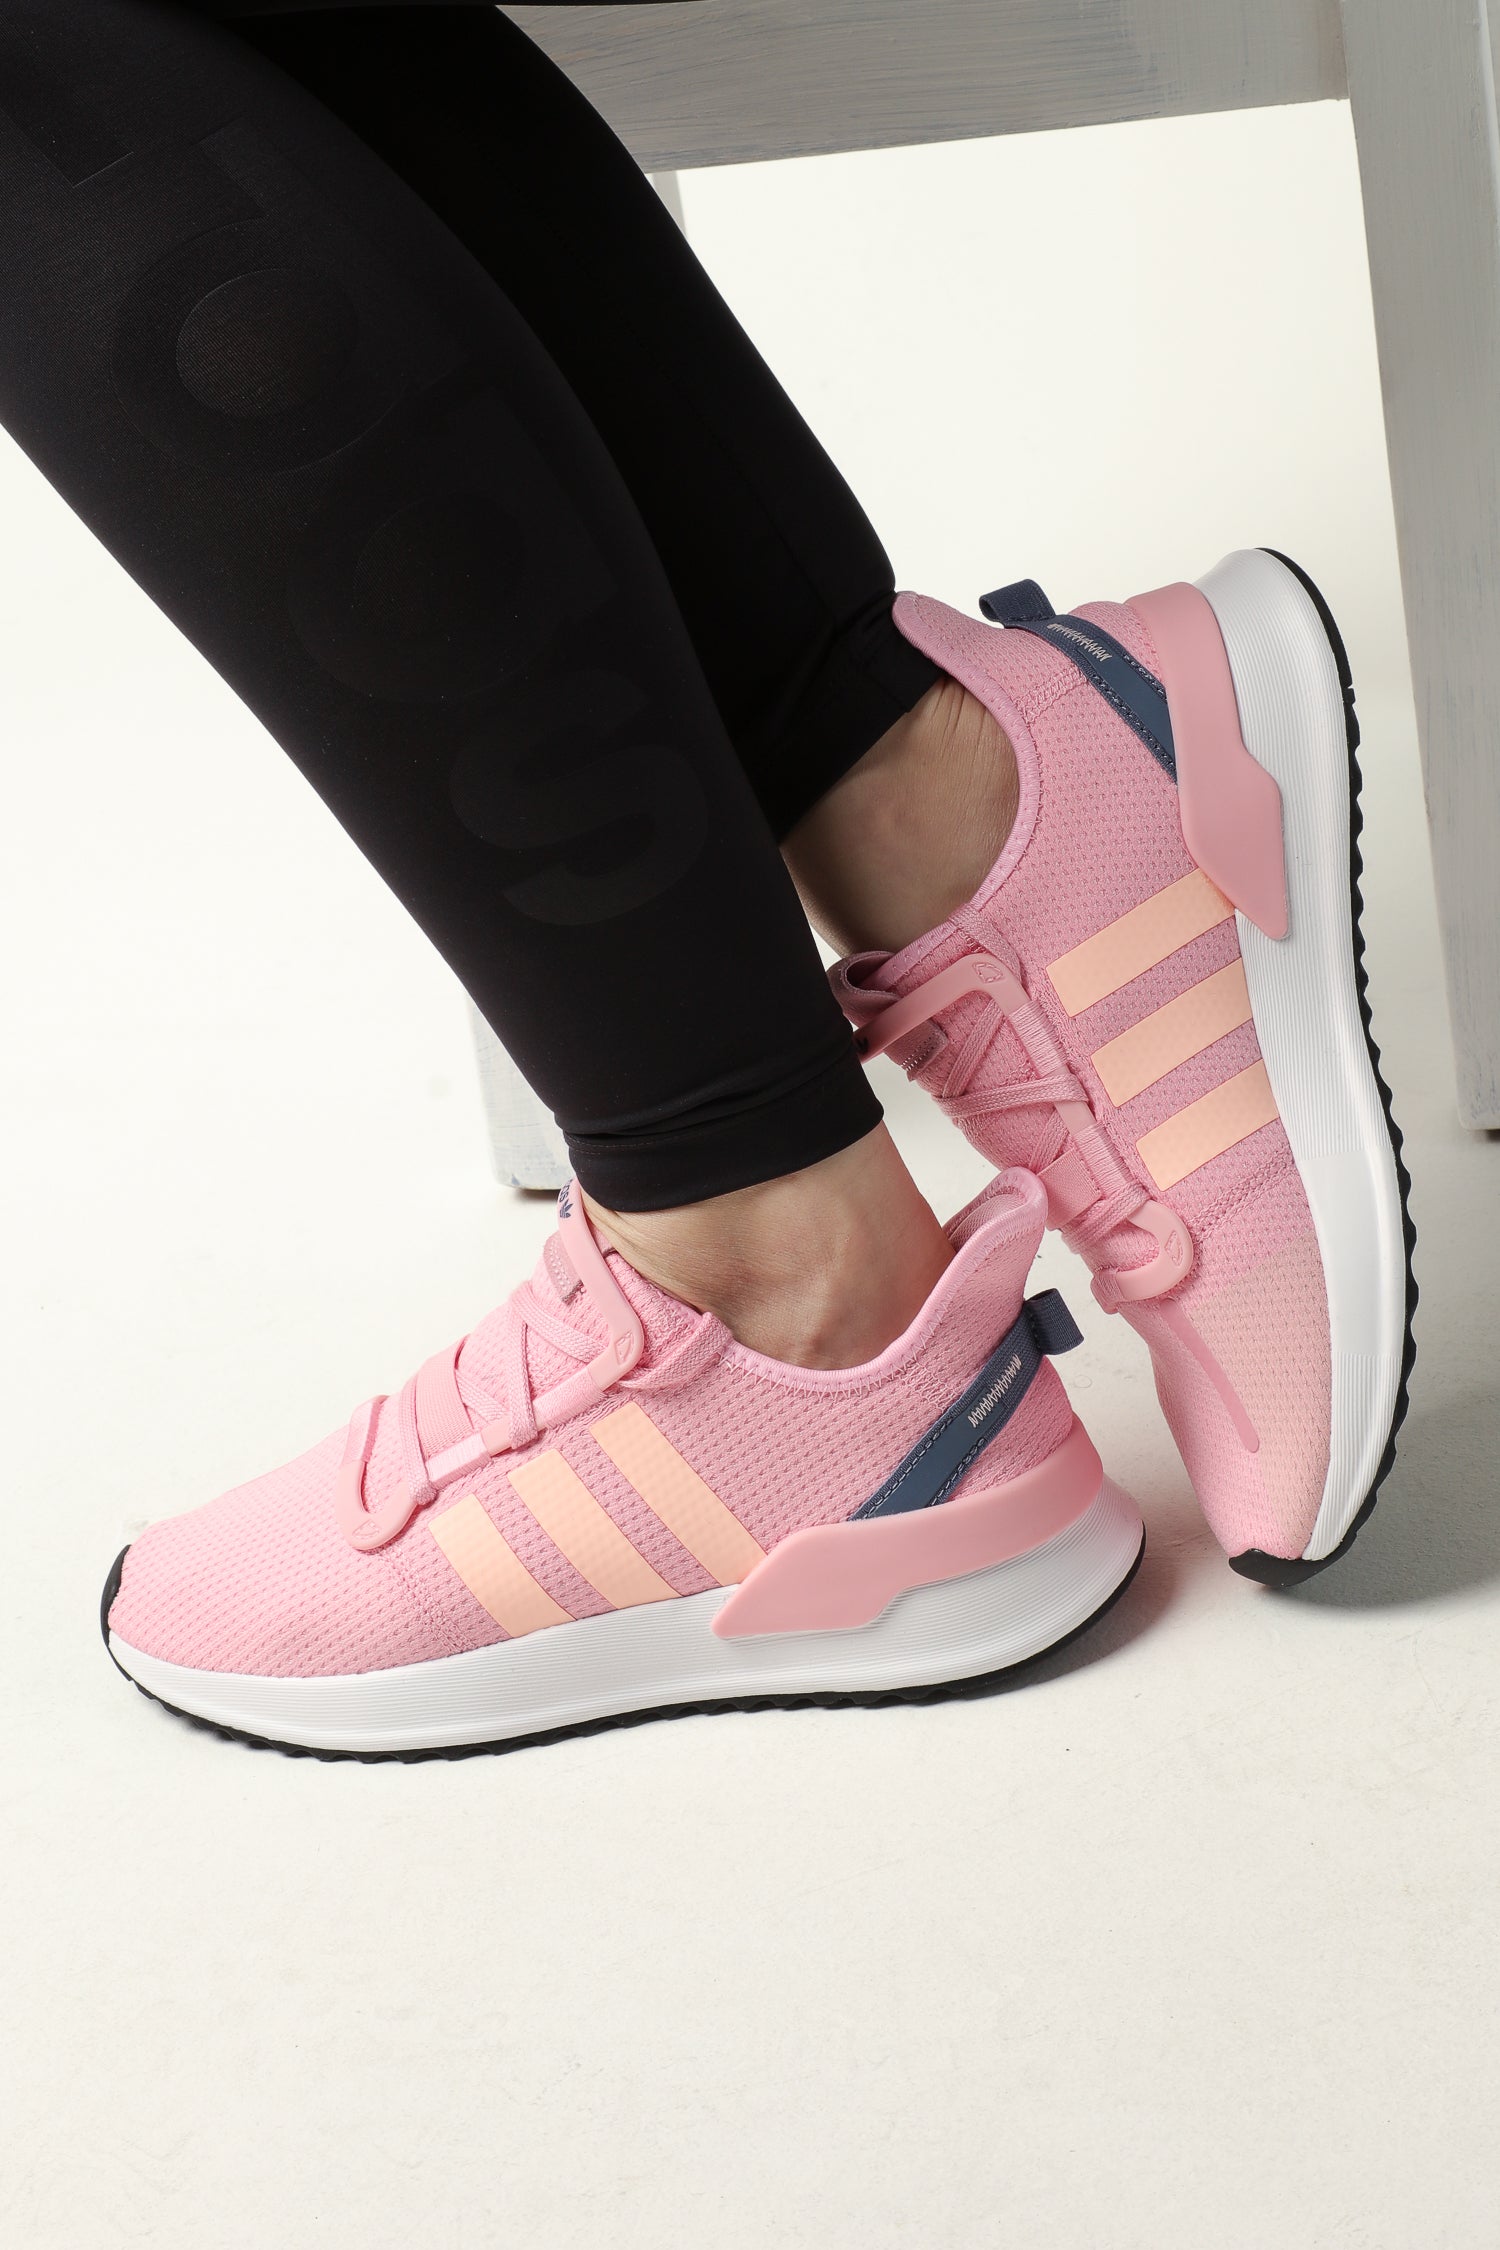 Adidas Women's U_Path Run Pink/Orange 